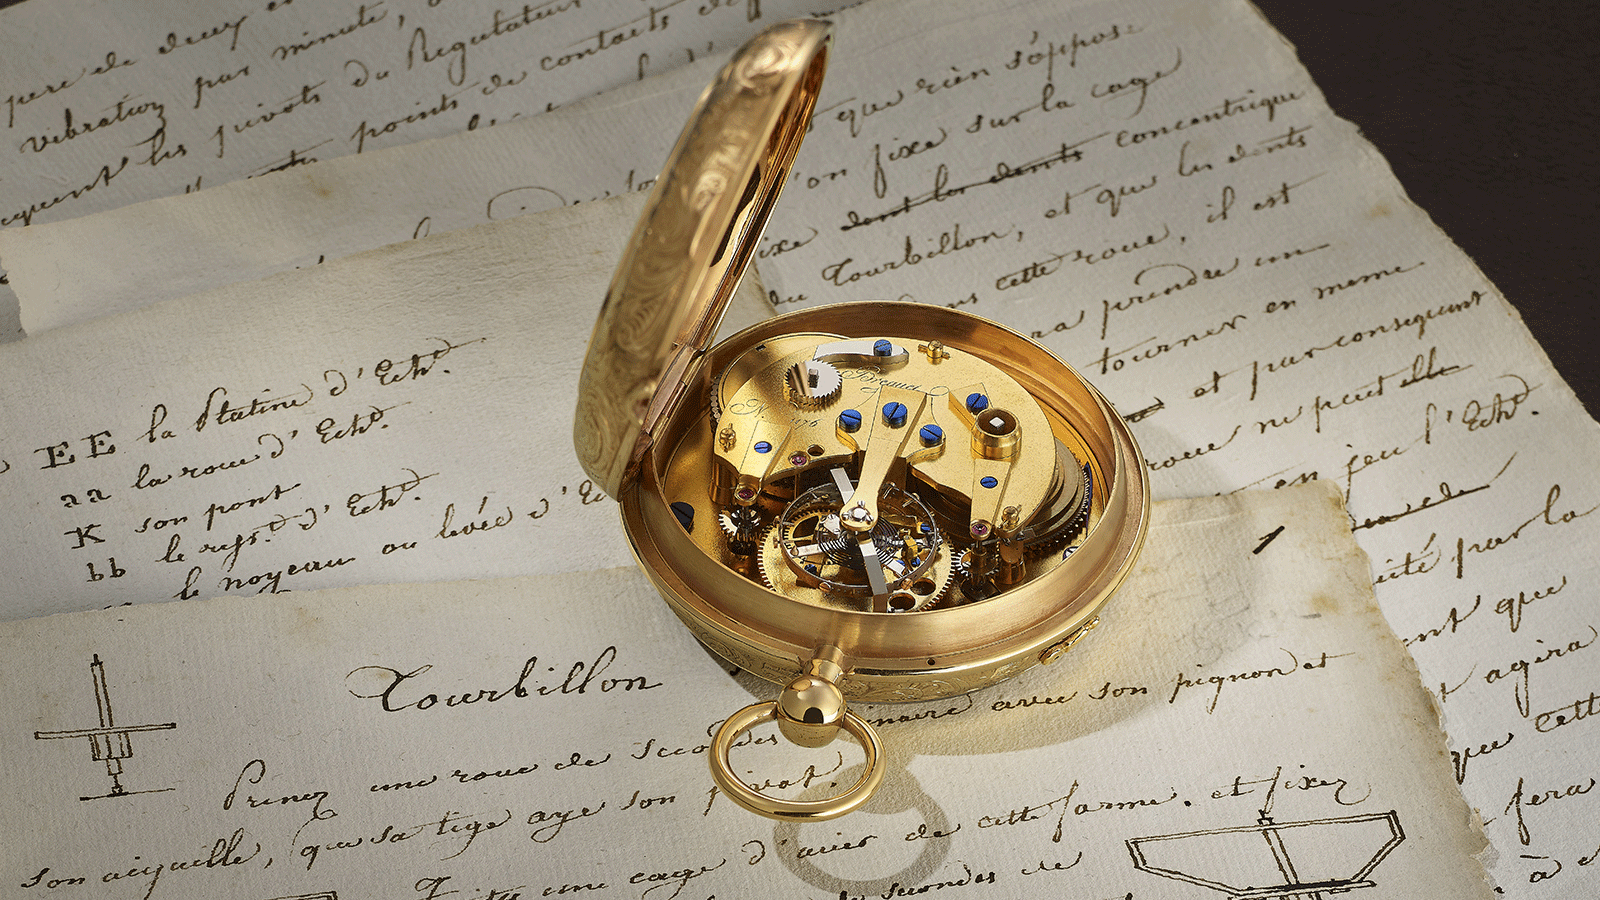 Breguet No. 1176 Tourbillon timepiece, sold in 1809 to Count Potocki